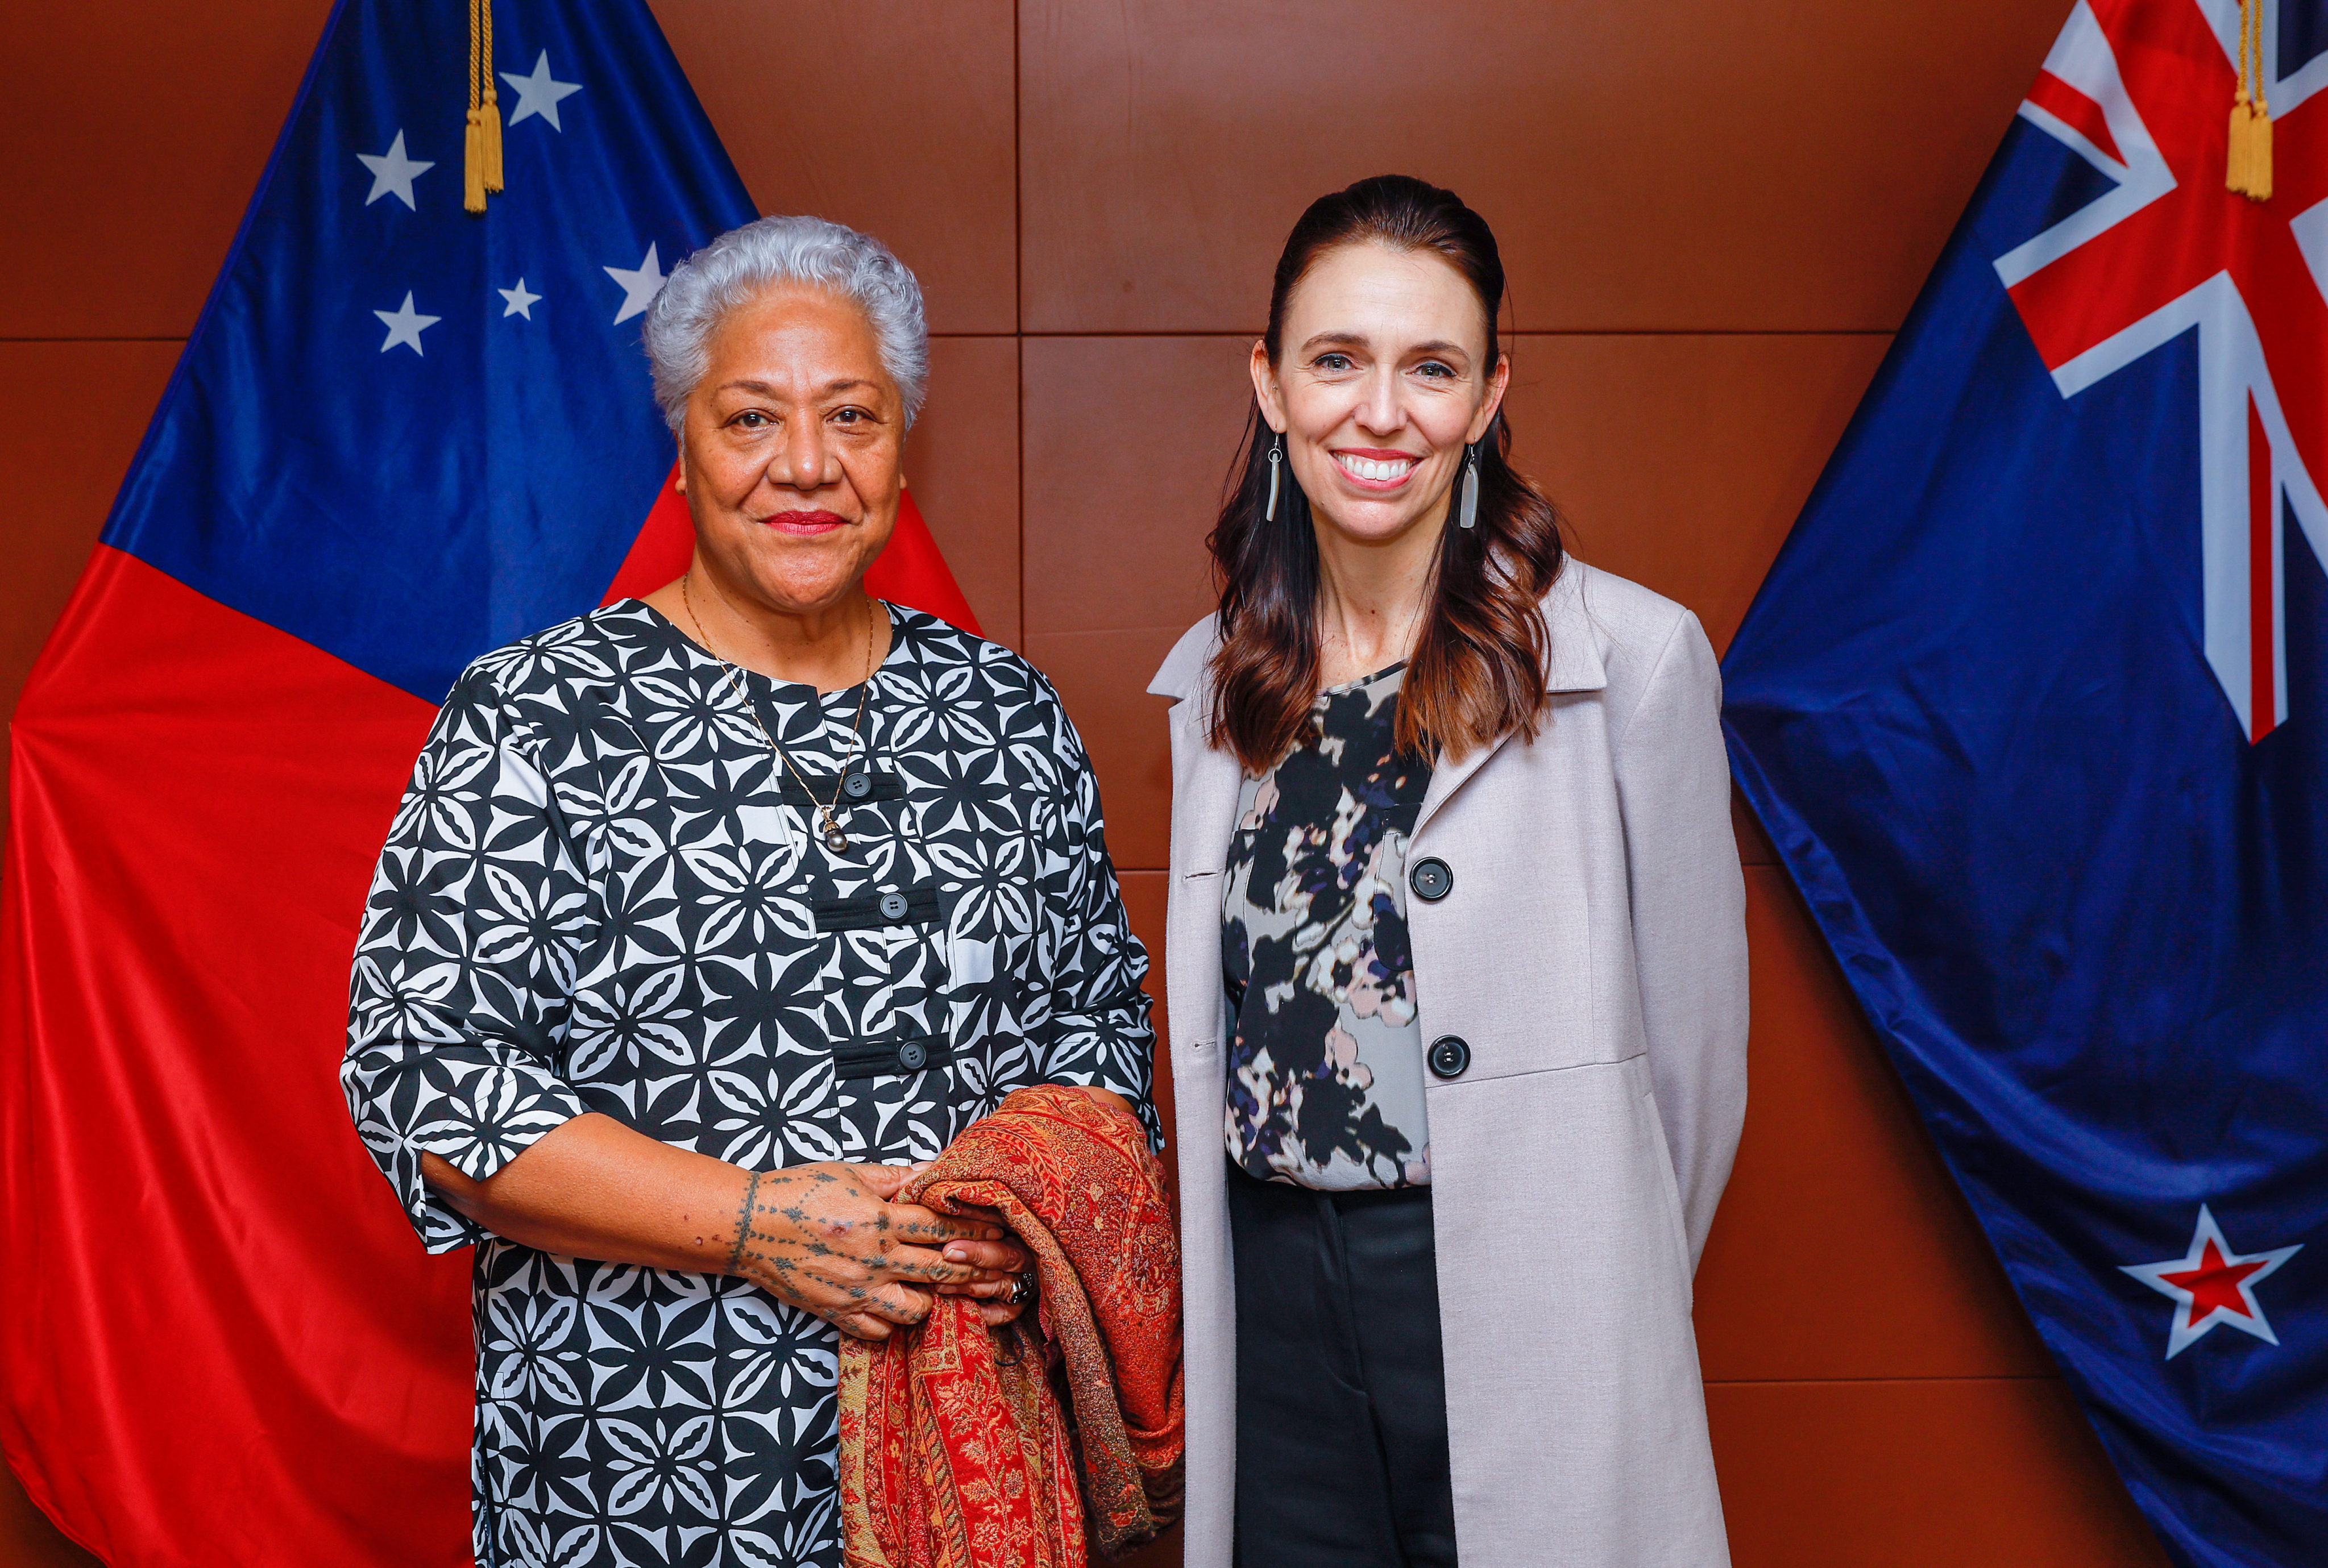 Samoa’s Prime Minister Fiame Naomi Mata’afa, left, and New Zealand Prime Minister Jacinda Ardern pose for a photo before a bilateral meeting in Wellington, New Zealand, on Tuesday, June 14, 2022. Photo: Pool via AP